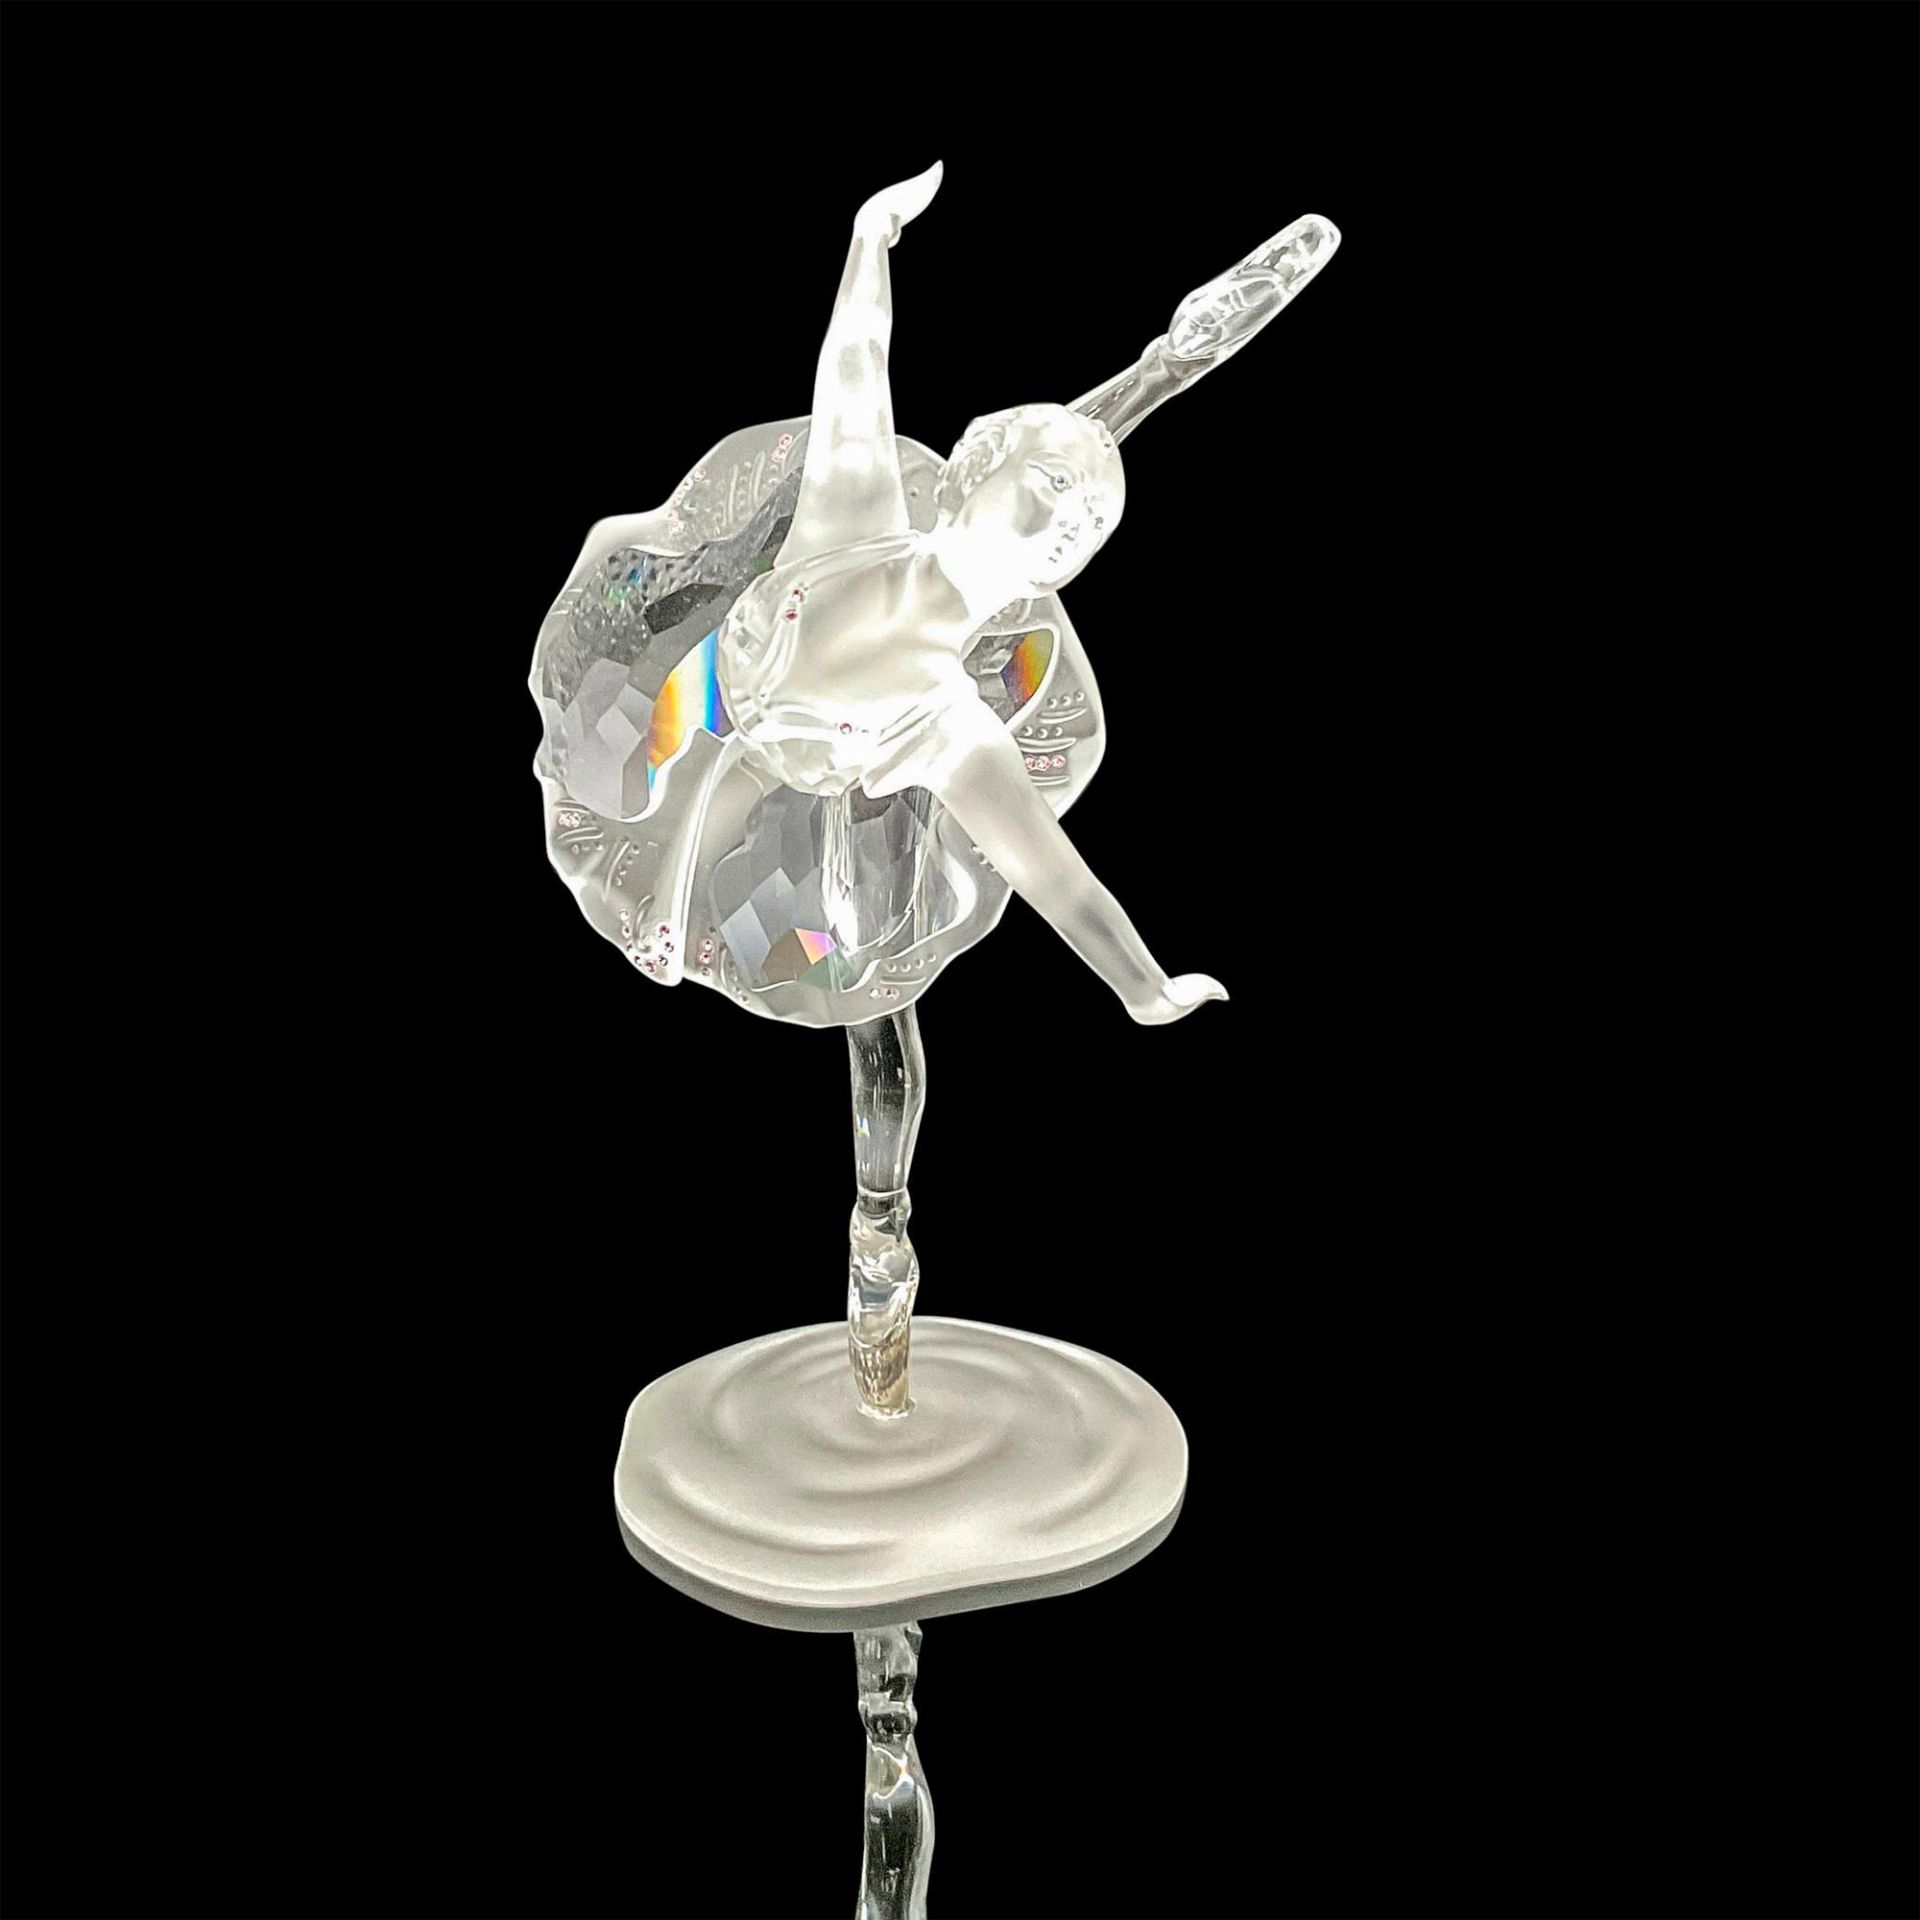 Swarovski Silver Crystal Figurine, Ballerina